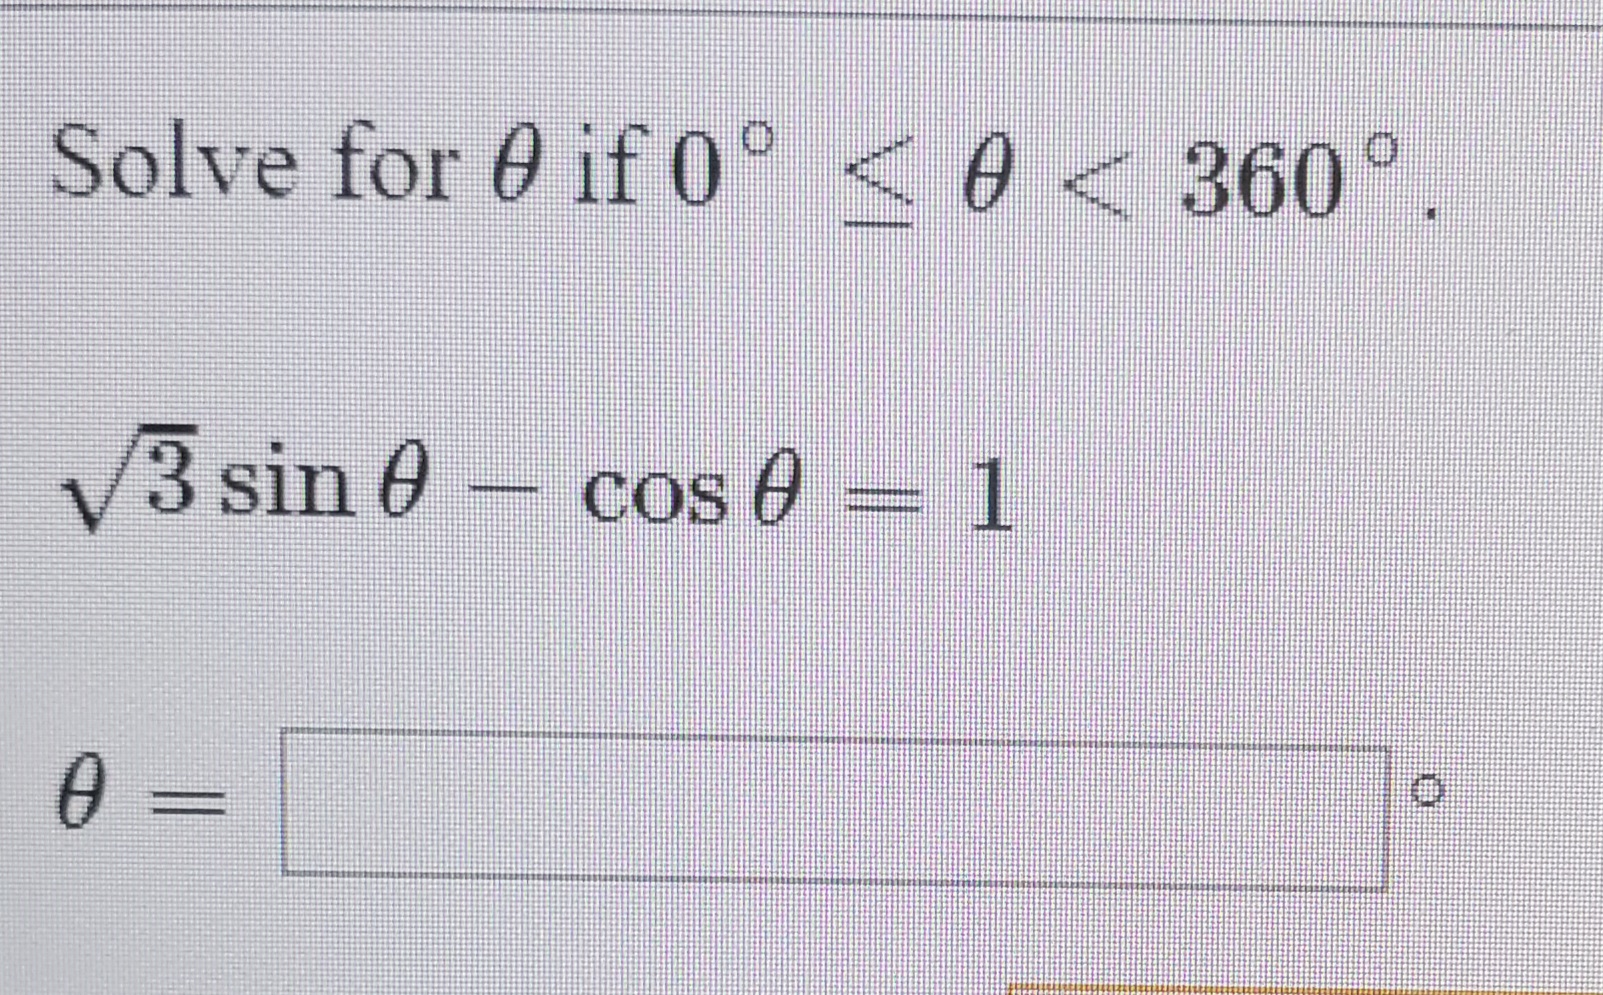 Solve for 0 if 0° < 0 < 360°
V3 sin 0
Cos e =1
